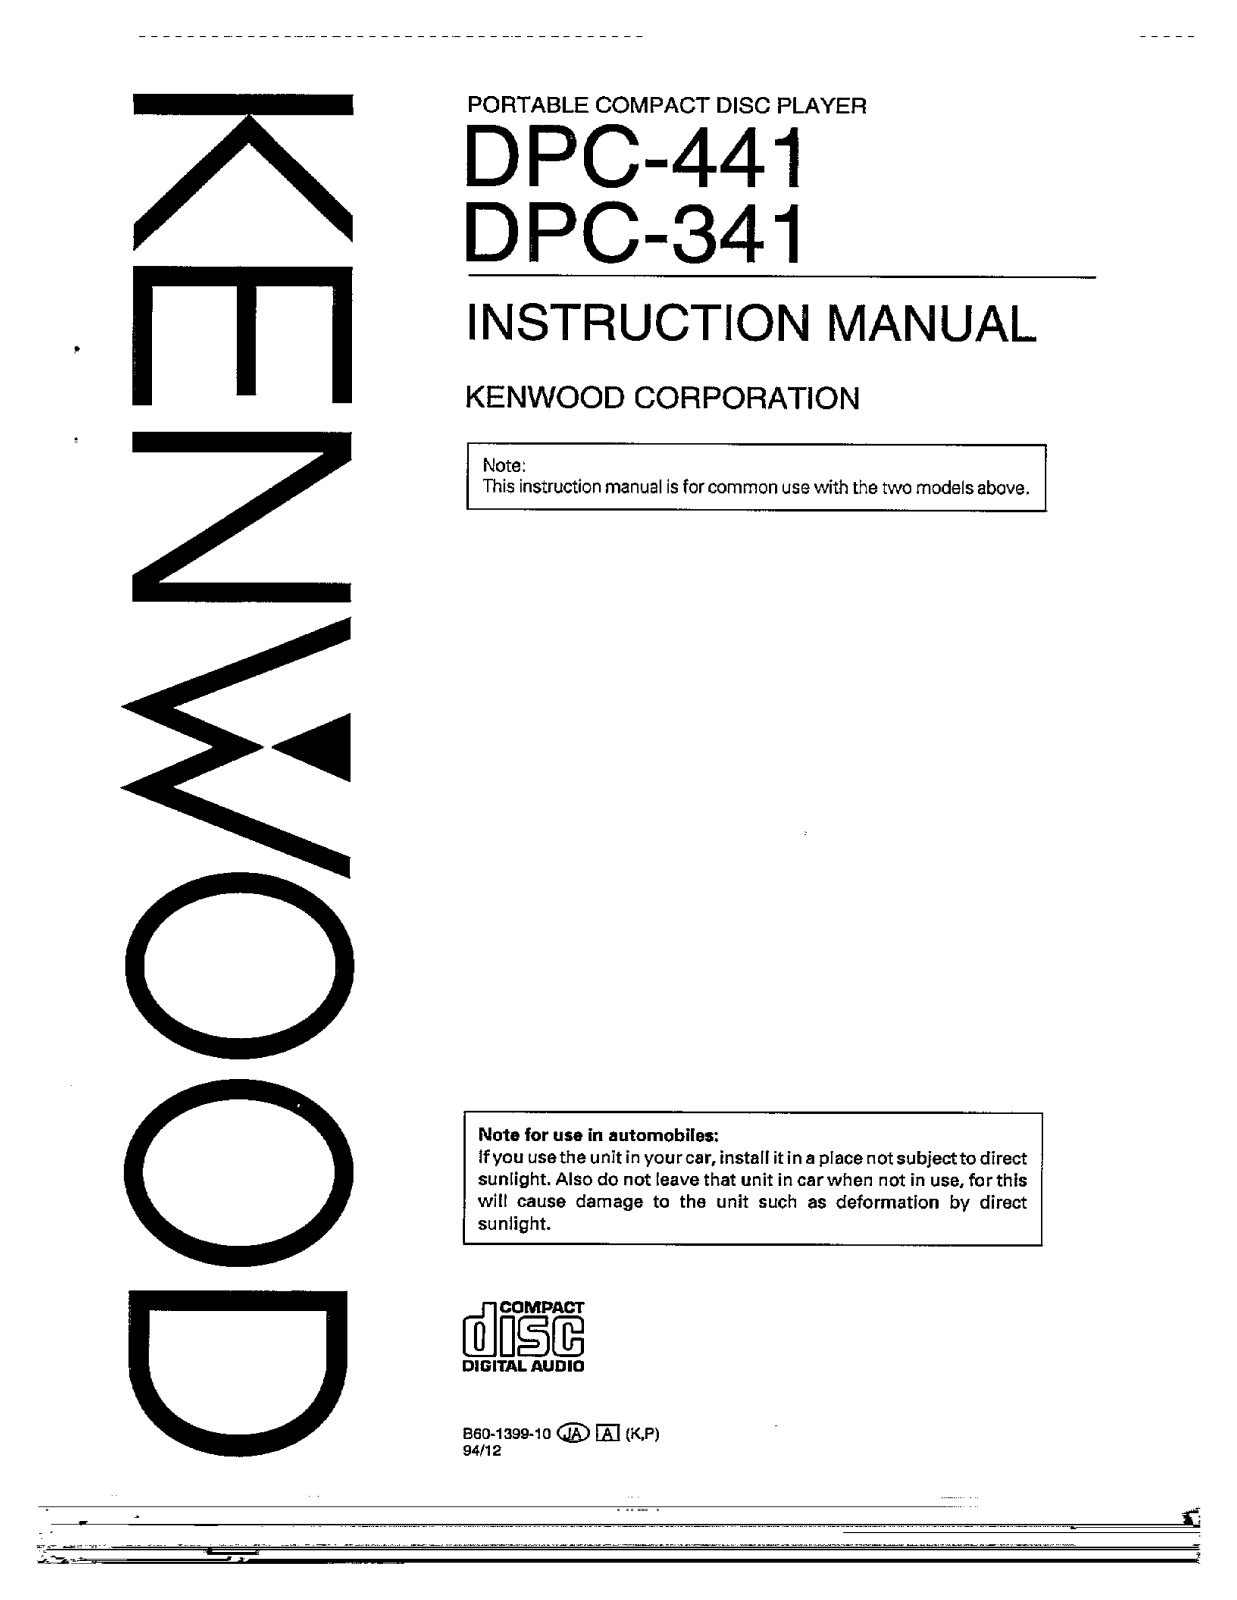 Kenwood DPC-441 User Manual